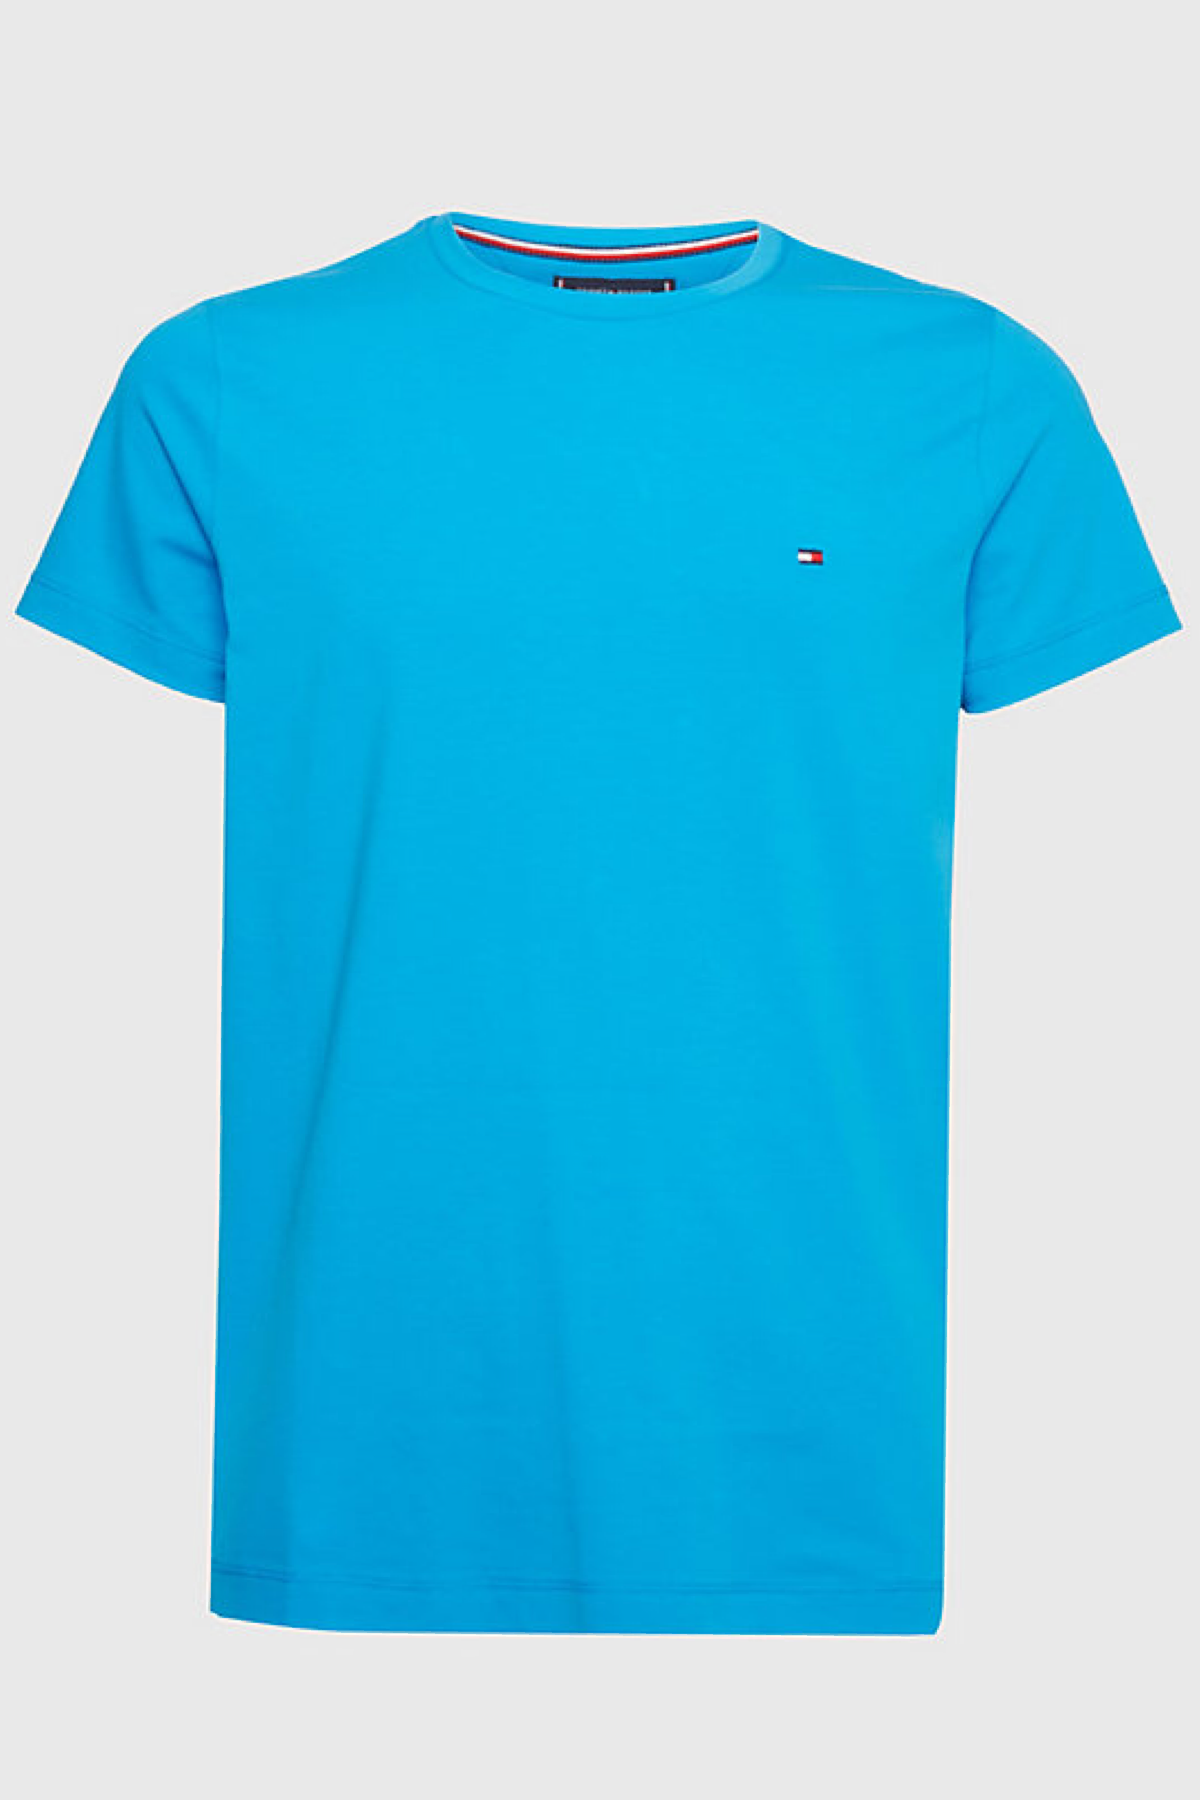 Tommy Hilfiger t-shirt turchese 10800